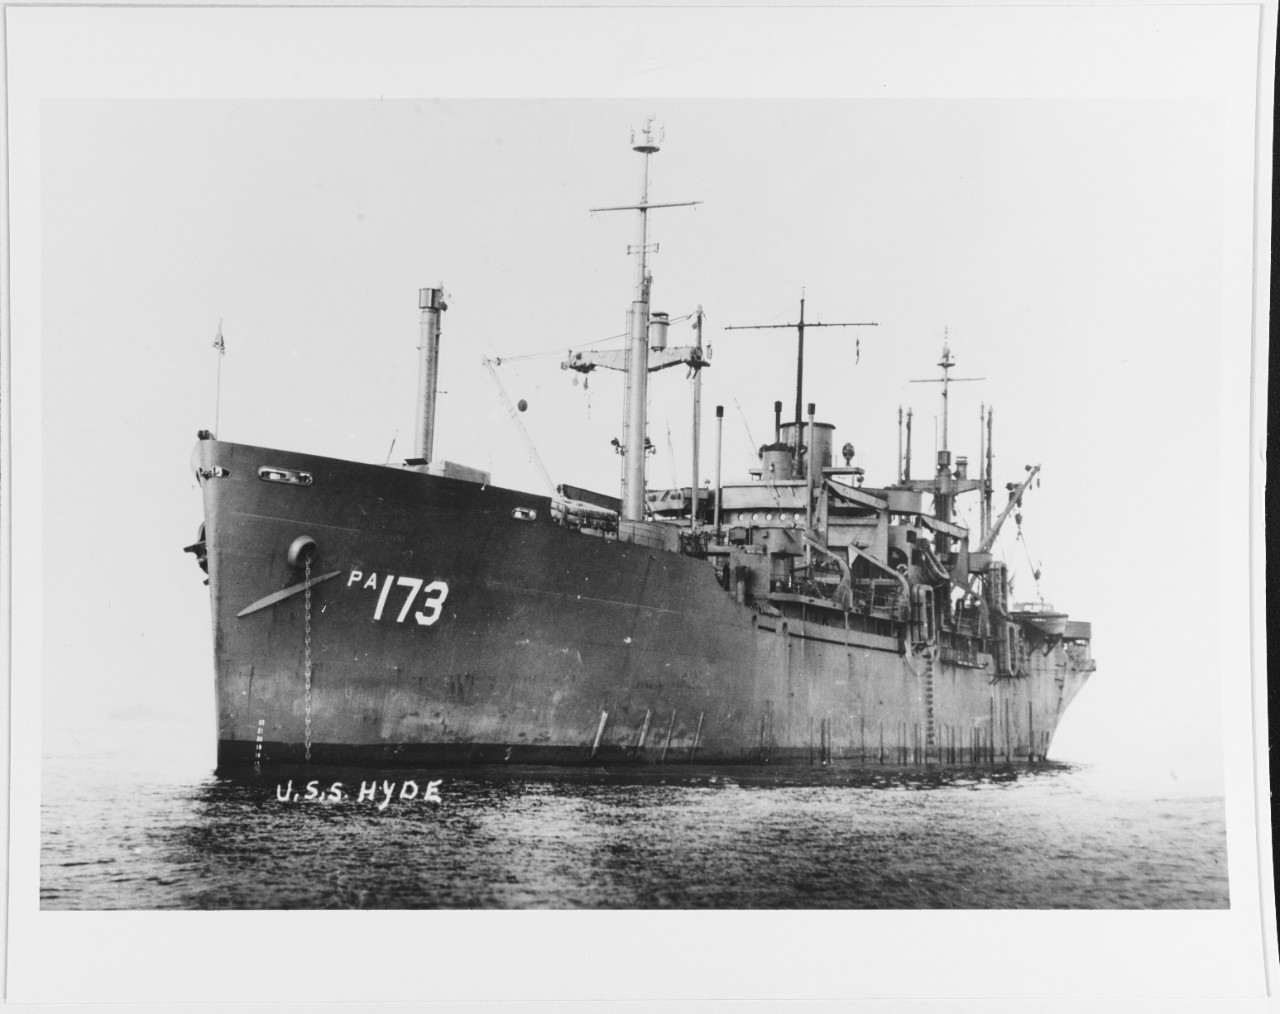 USS HYDE (APA-173)